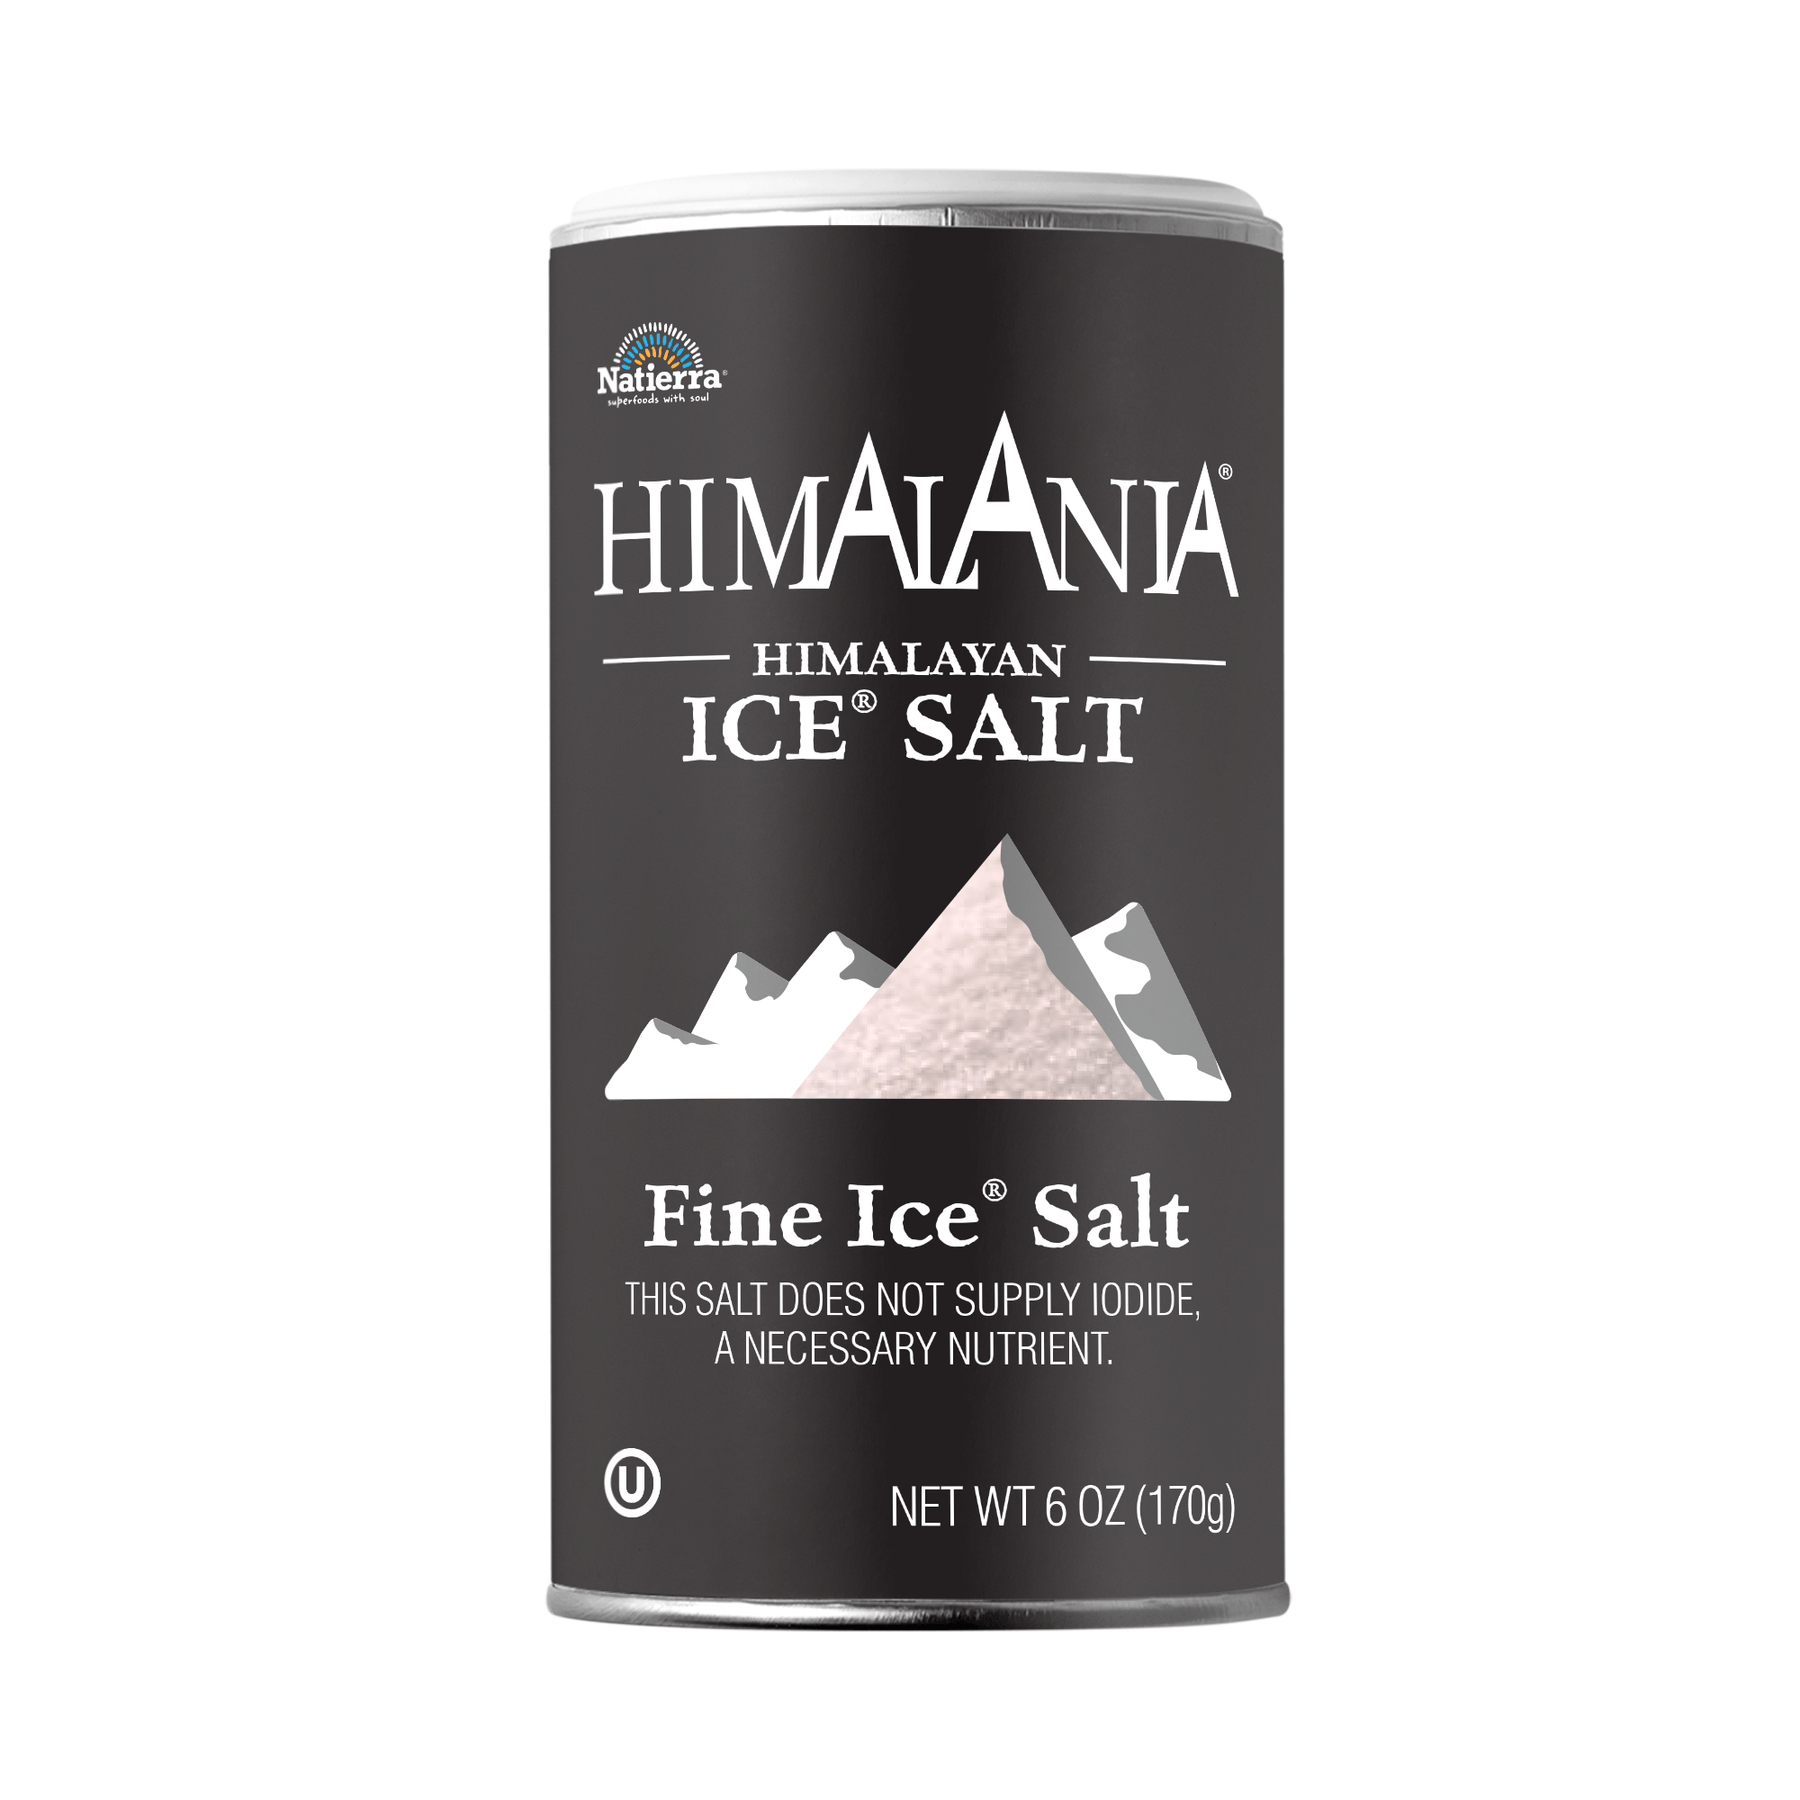 Natierra Himalania Ice Salt  6 oz shaker